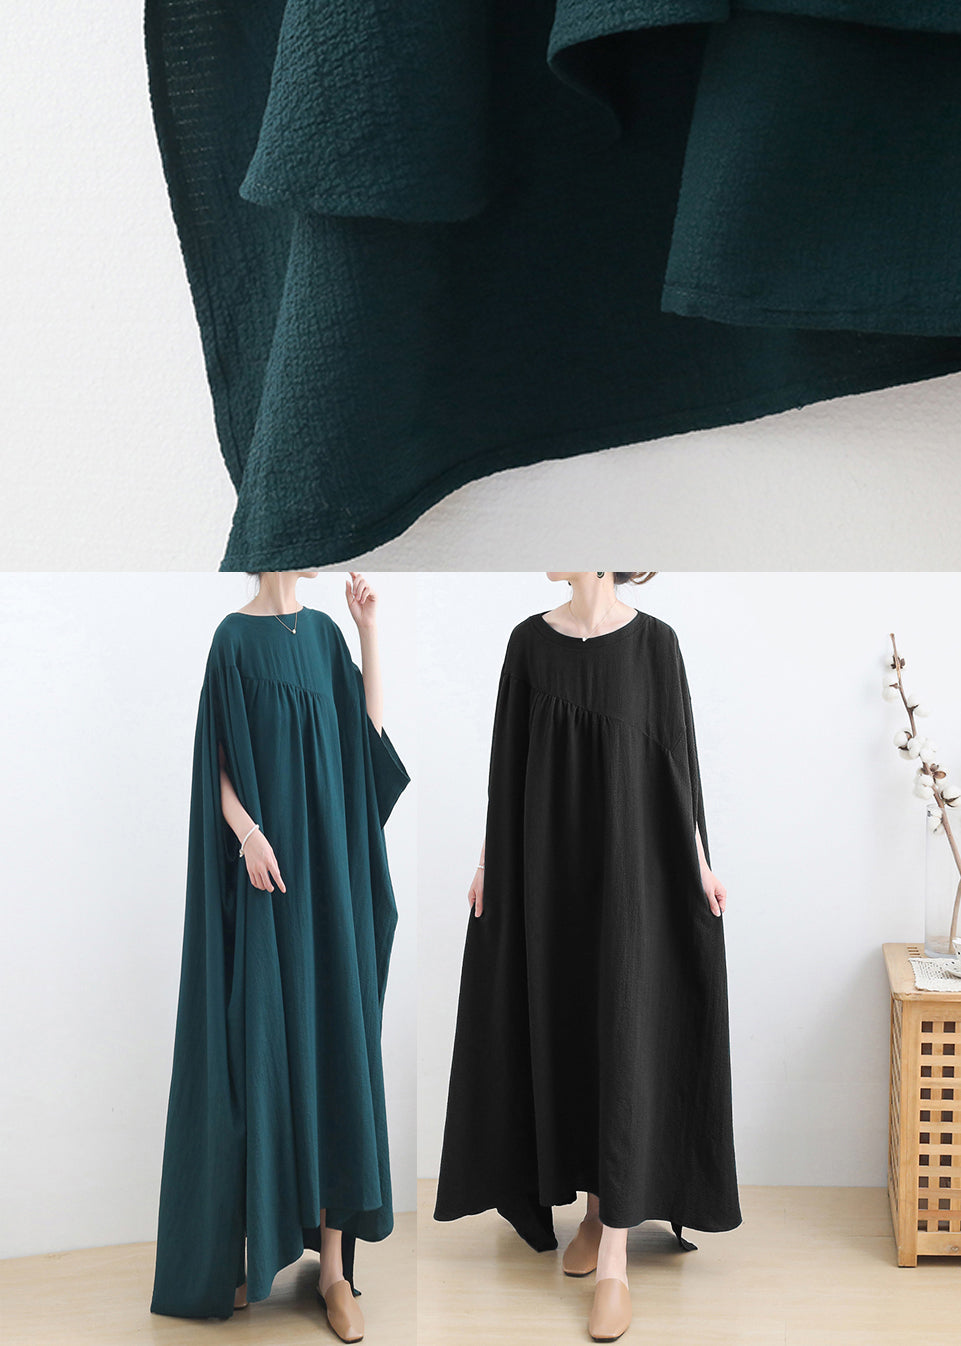 Black Low High Design Cotton Long Dress Short Sleeve